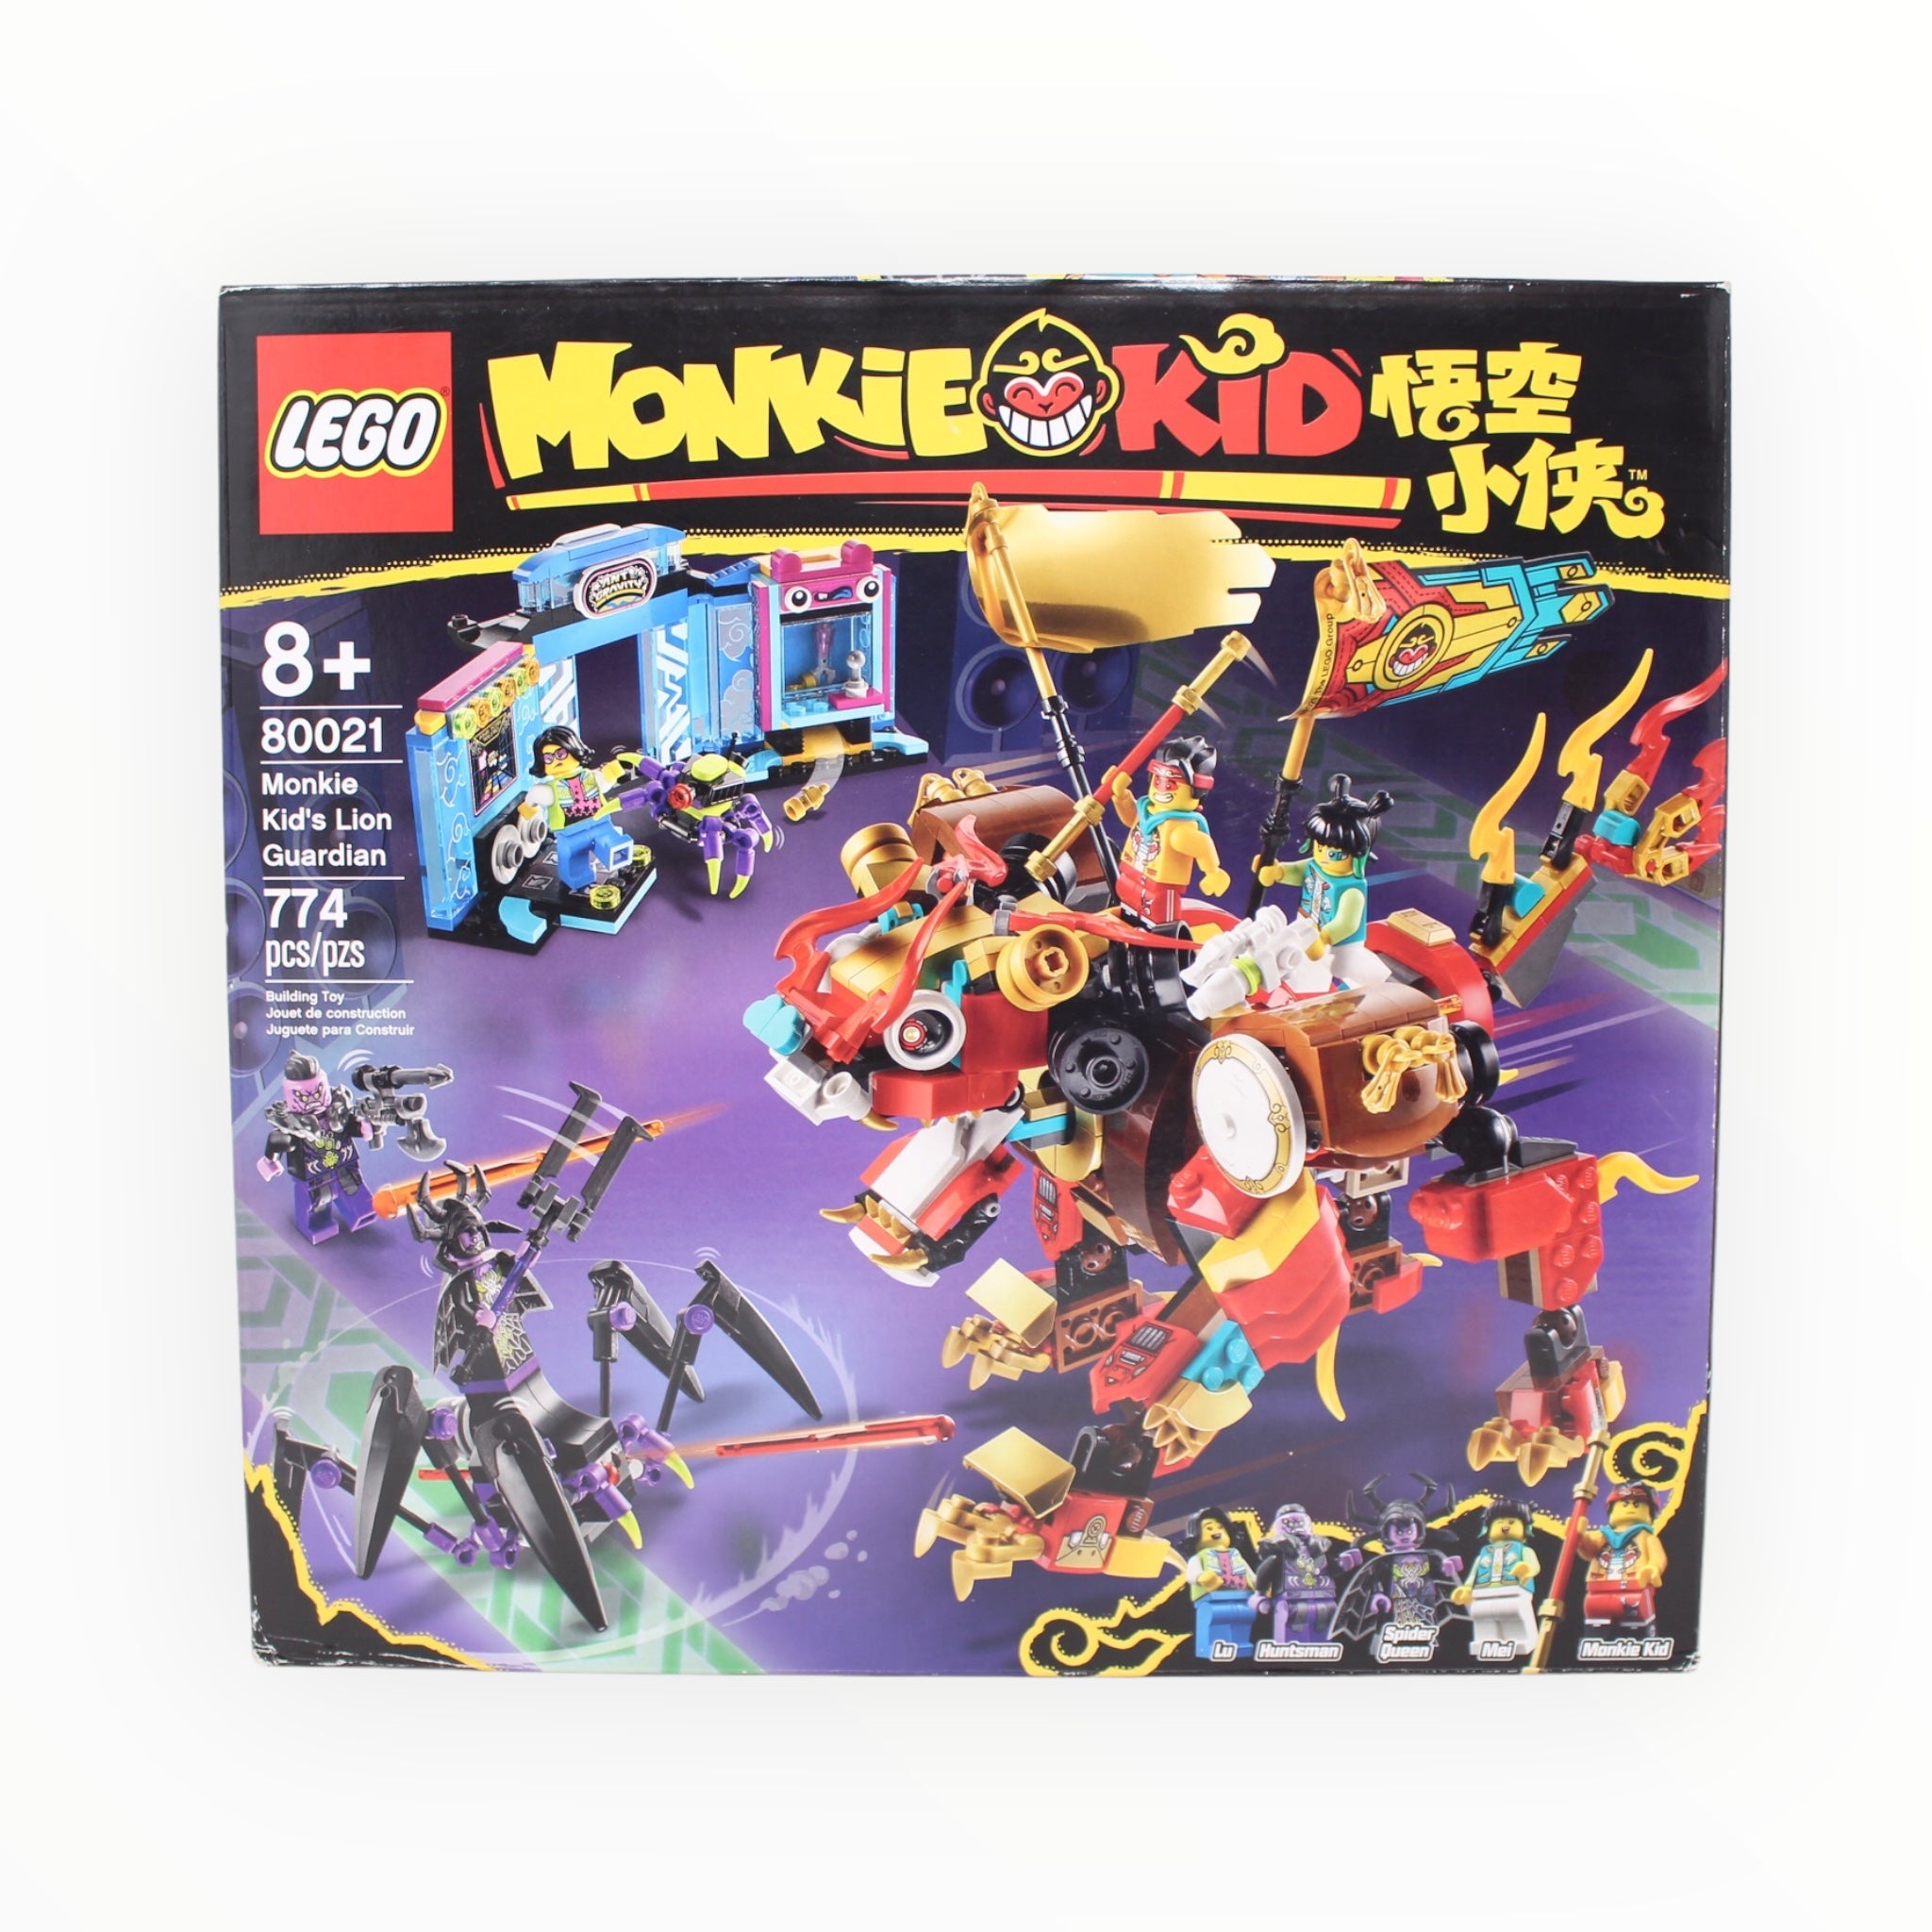 Certified Used Set 80021 Monkie Kid’s Lion Guardian (open box, sealed bags)